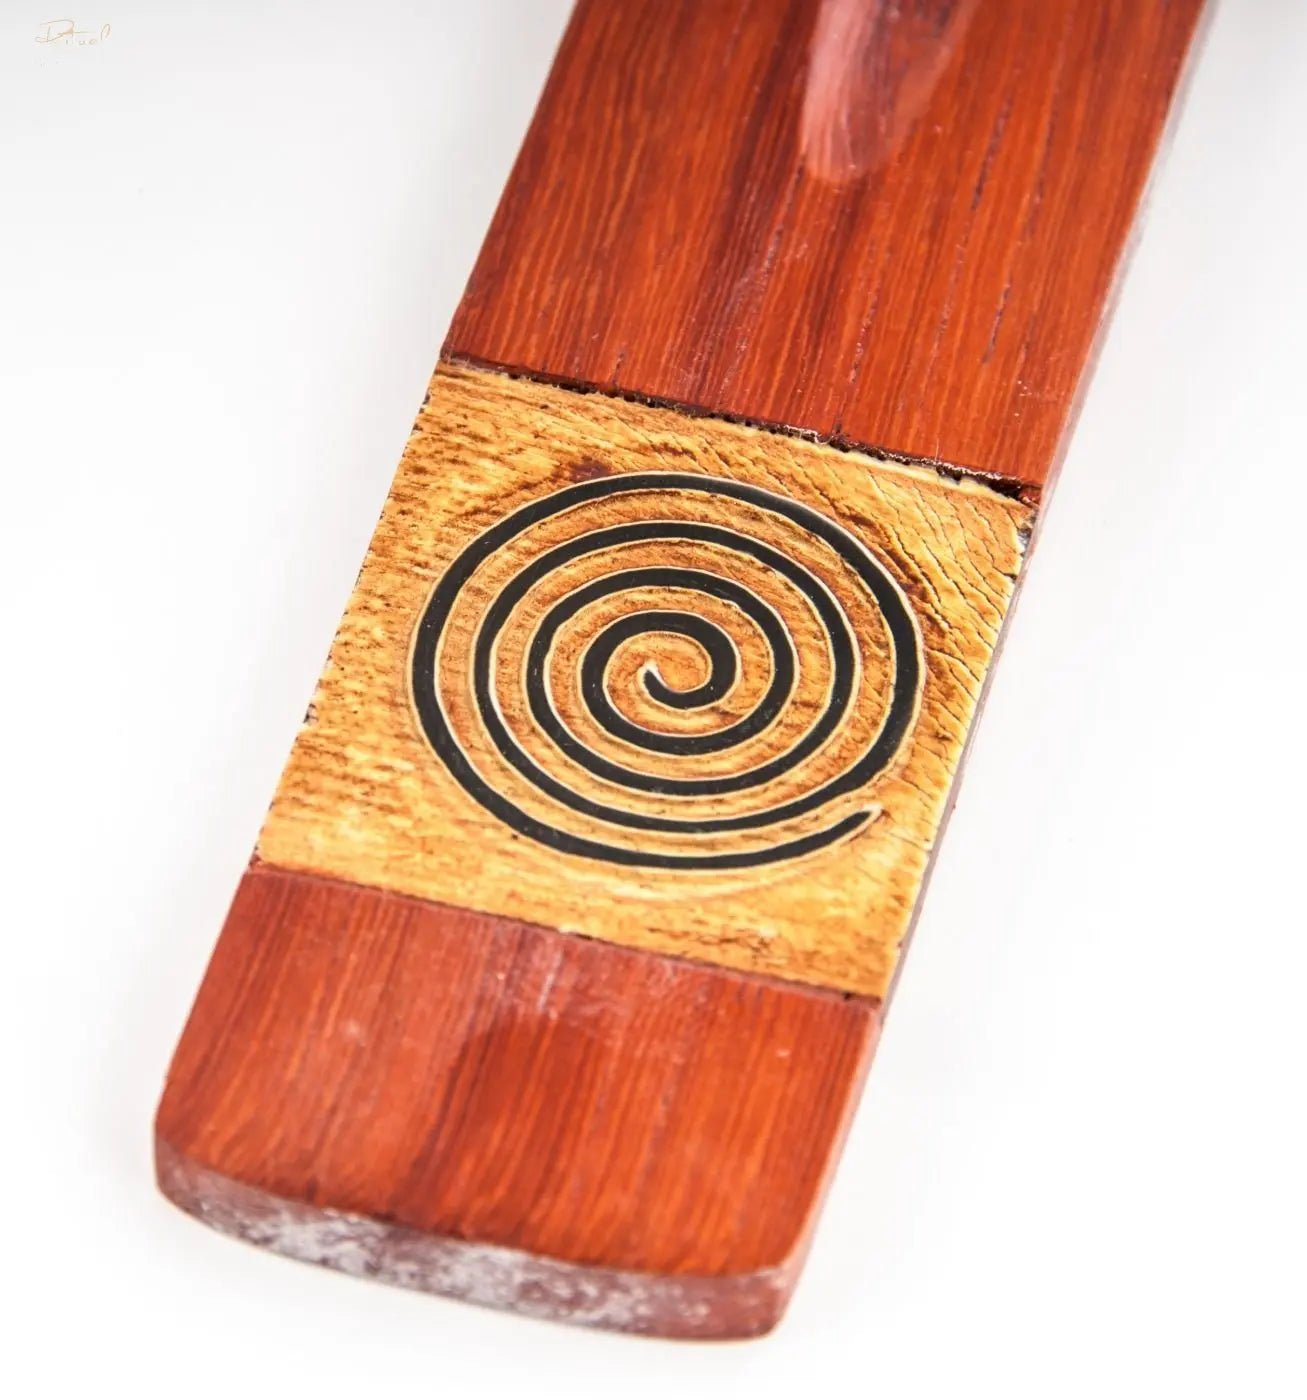 Spirale - Halter aus rotem Holz Berk